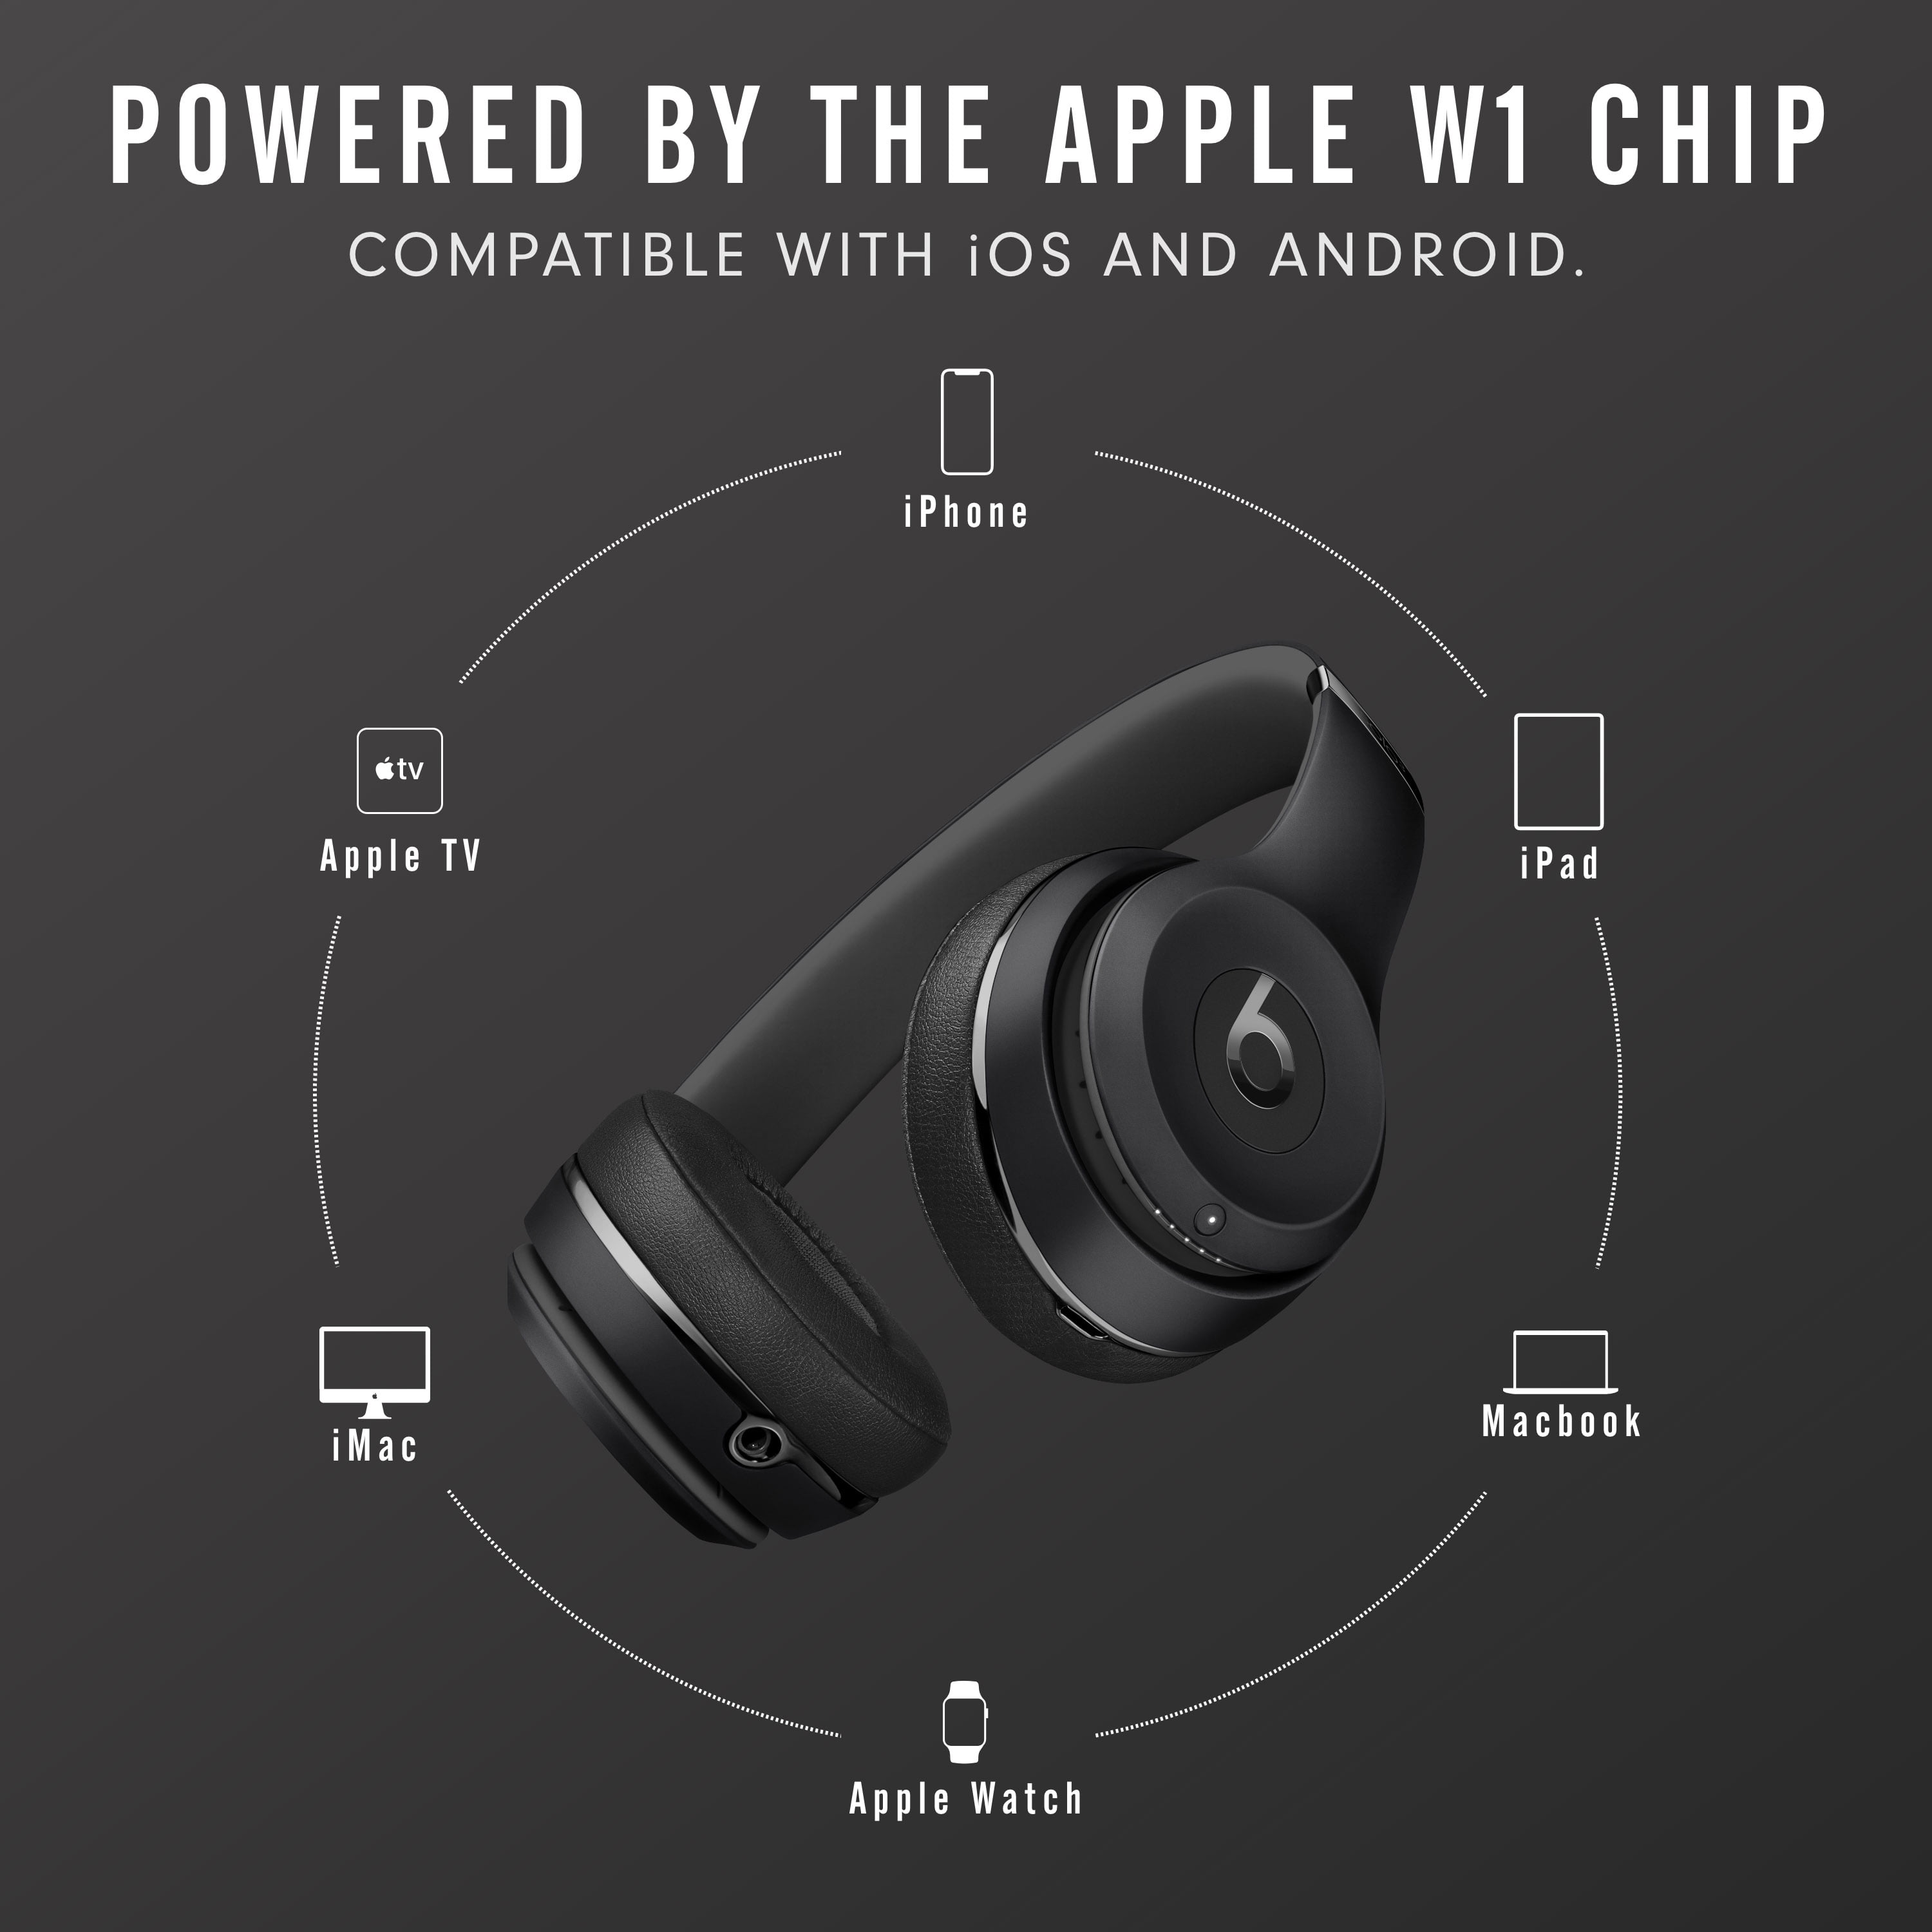 Beats Solo3 Wireless On-Ear Headphones with Apple W1 Headphone 